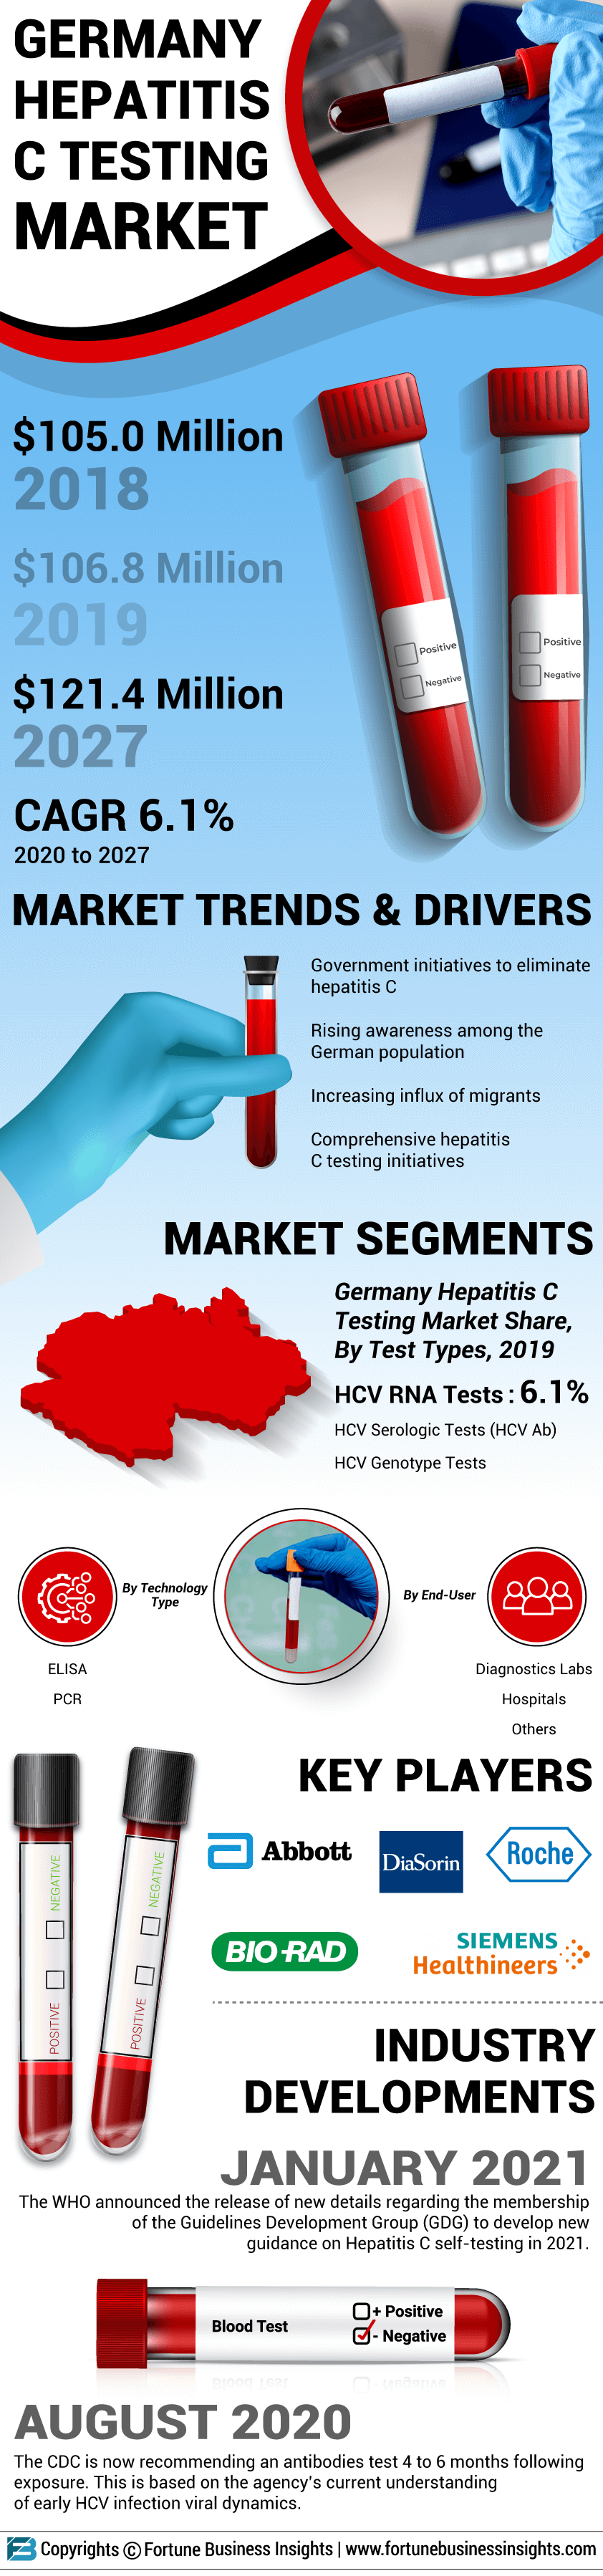 Germany Hepatitis C Testing Market